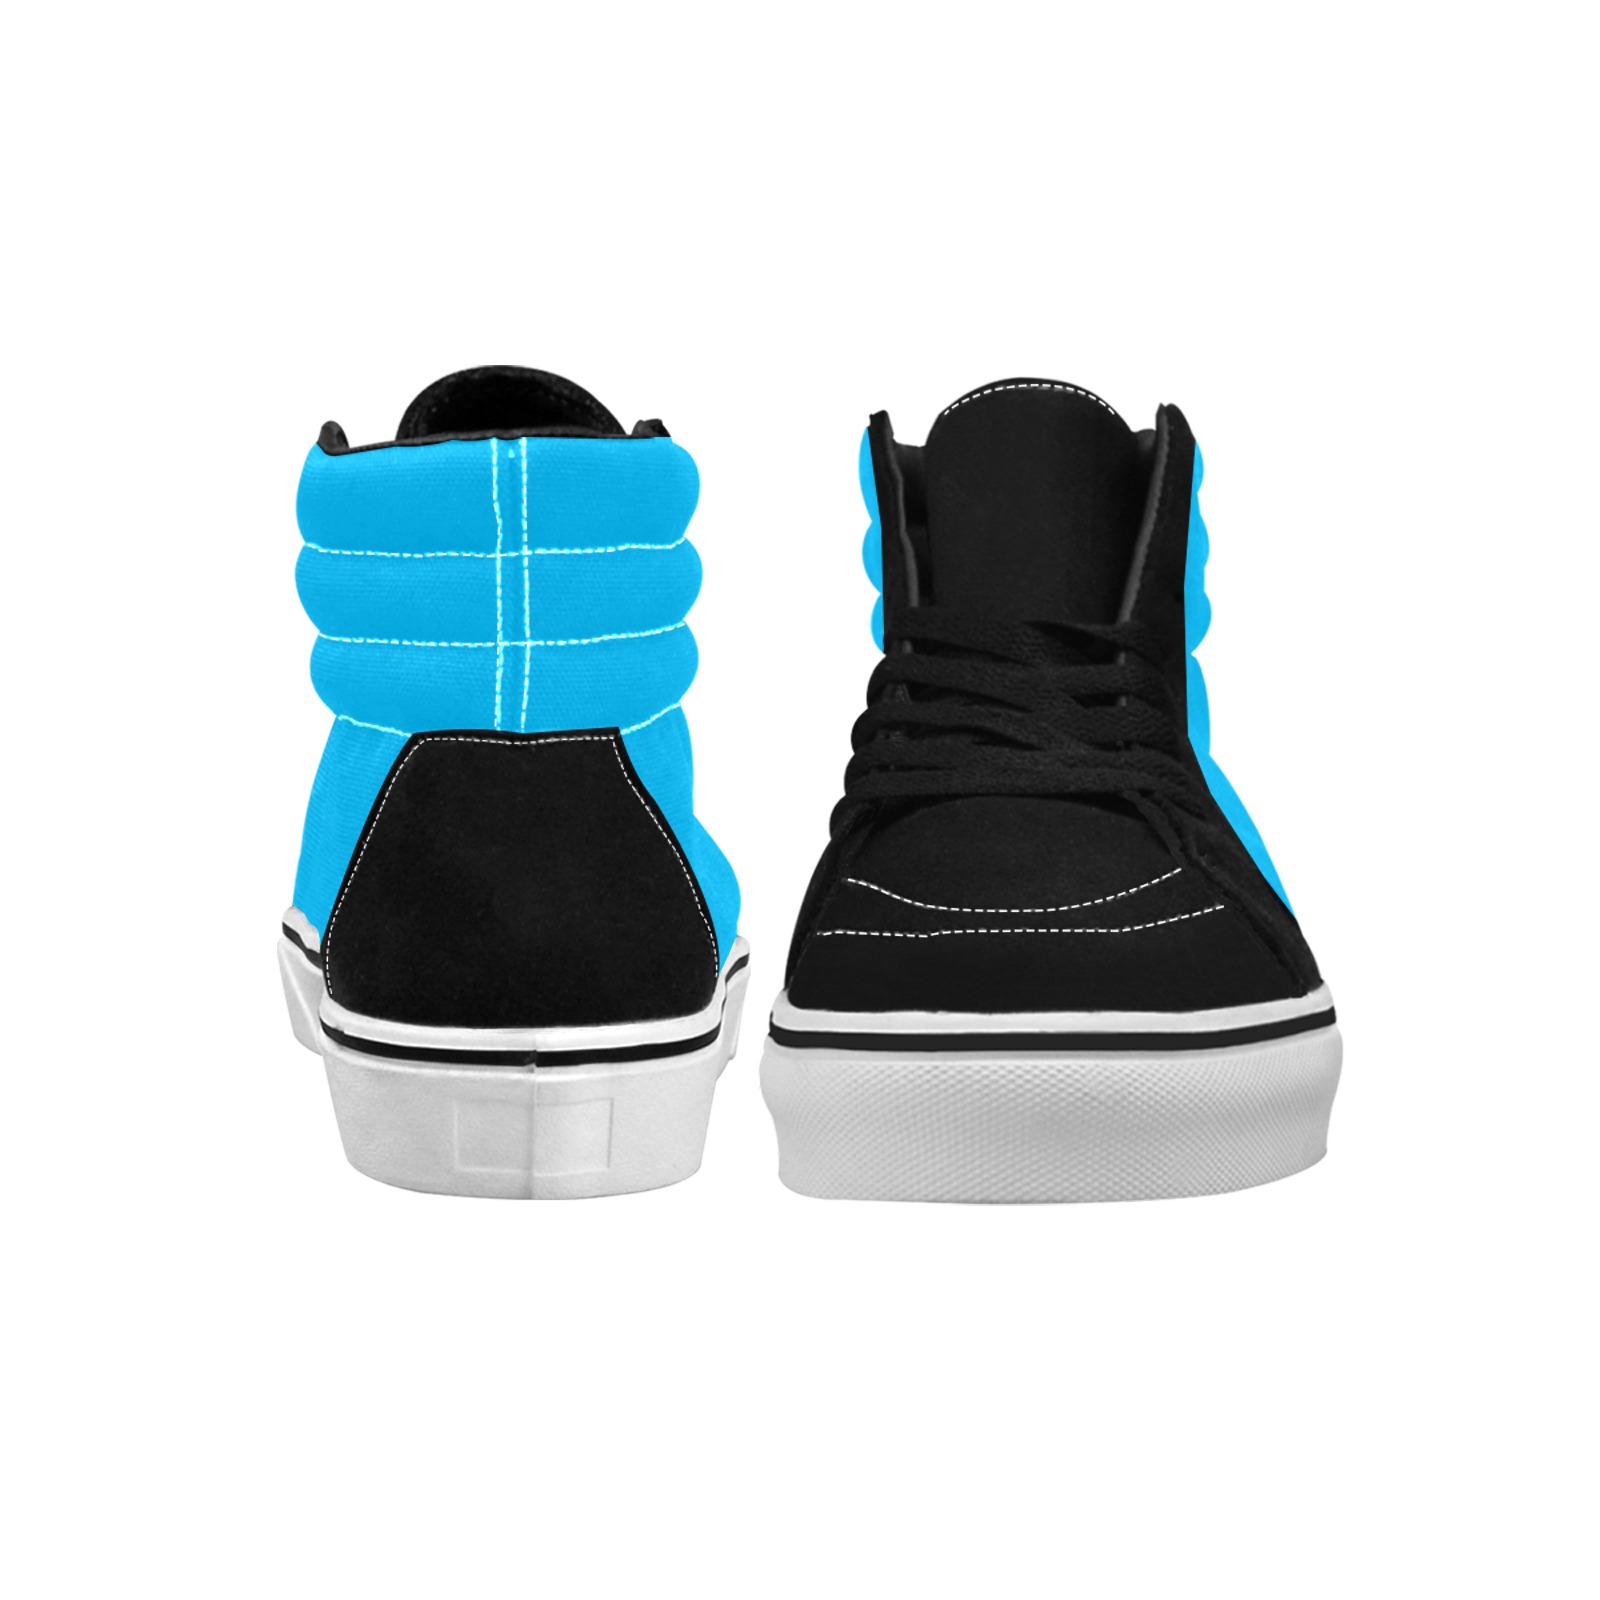 color deep sky blue Women's High Top Skateboarding Shoes (Model E001-1)